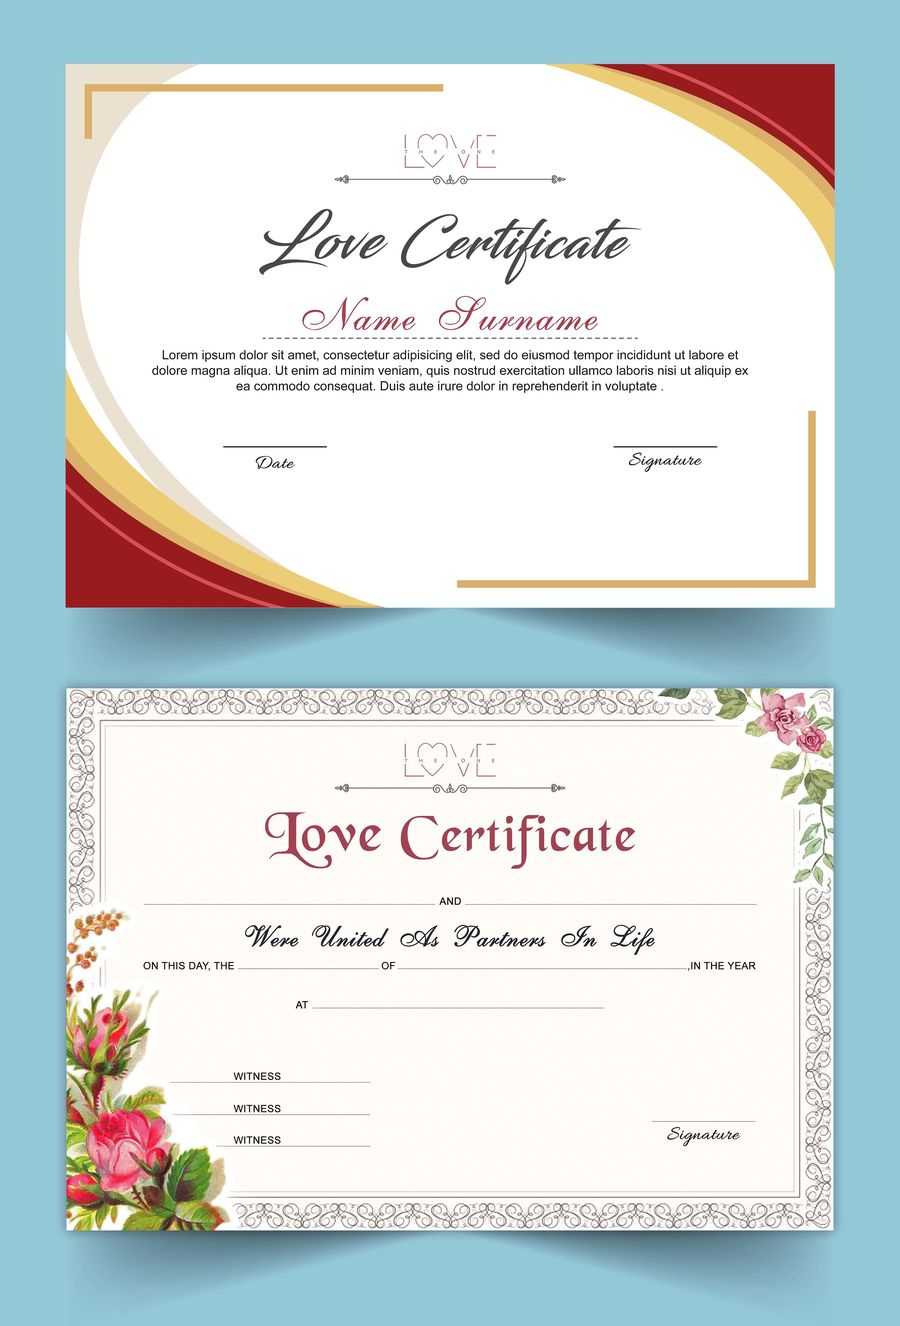 Entry #15Satishandsurabhi For Design A Love Certificate For Love Certificate Templates